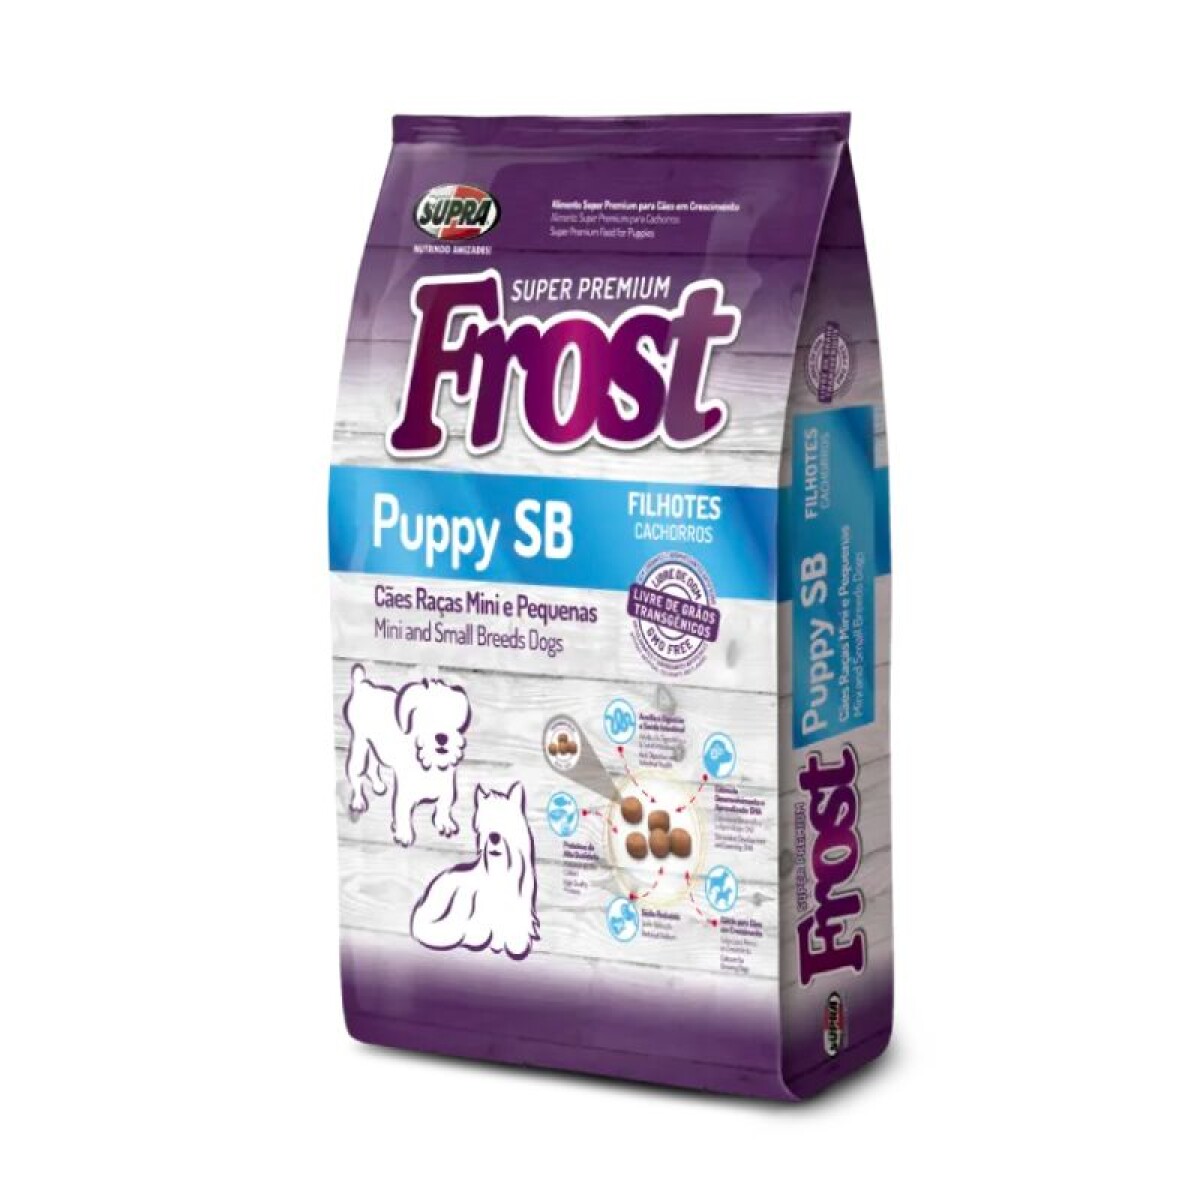 FROST PUPPY SB 2.5KG - Frost Puppy Sb 2.5kg 